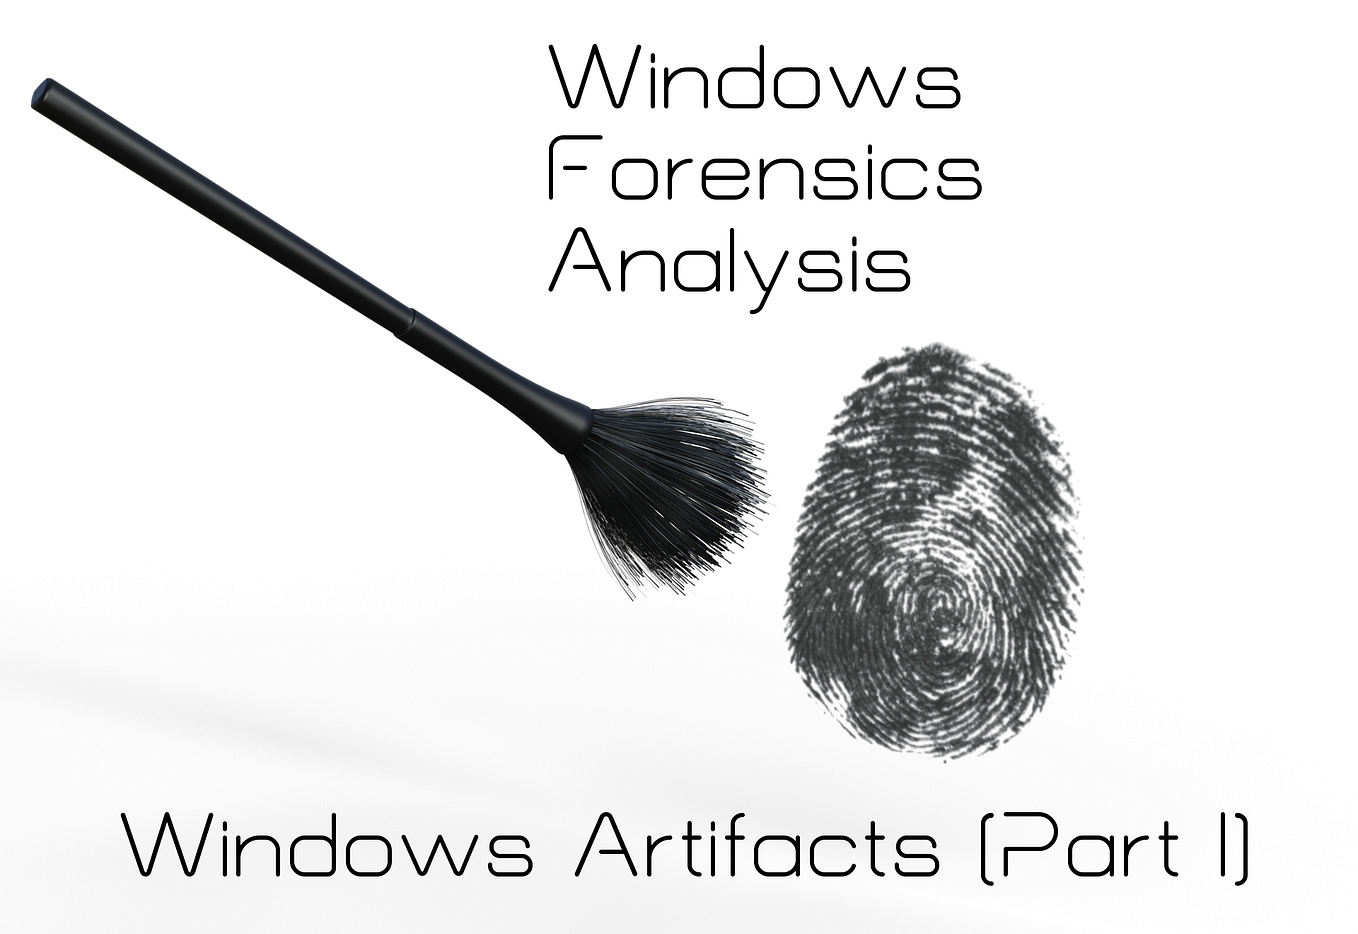 Windows Forensics Analysis — Windows Artifacts (Part I)